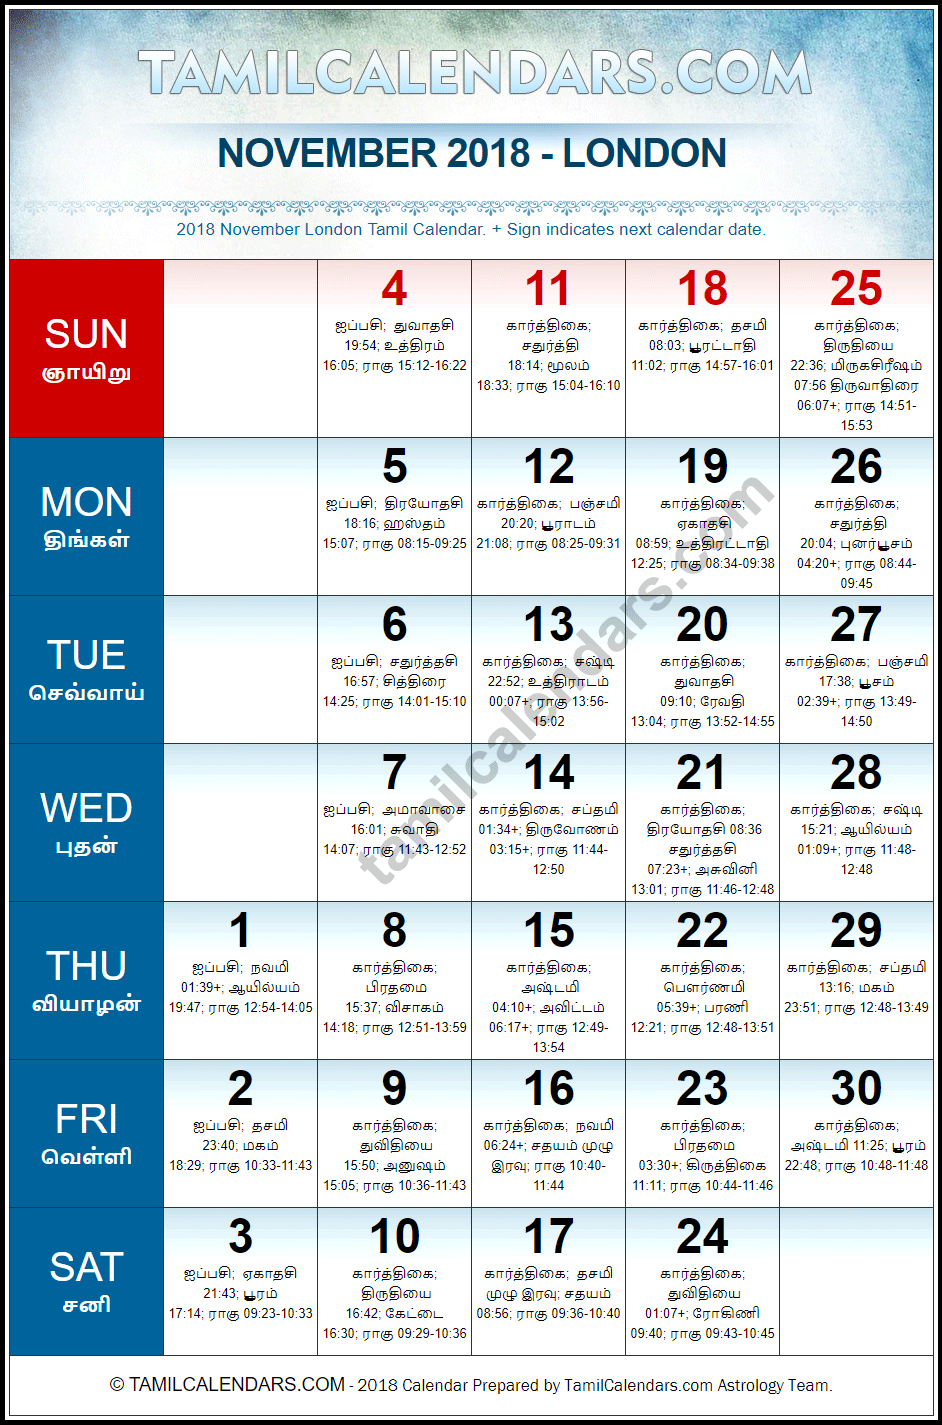 November 2018 Tamil Calendar for London, UK